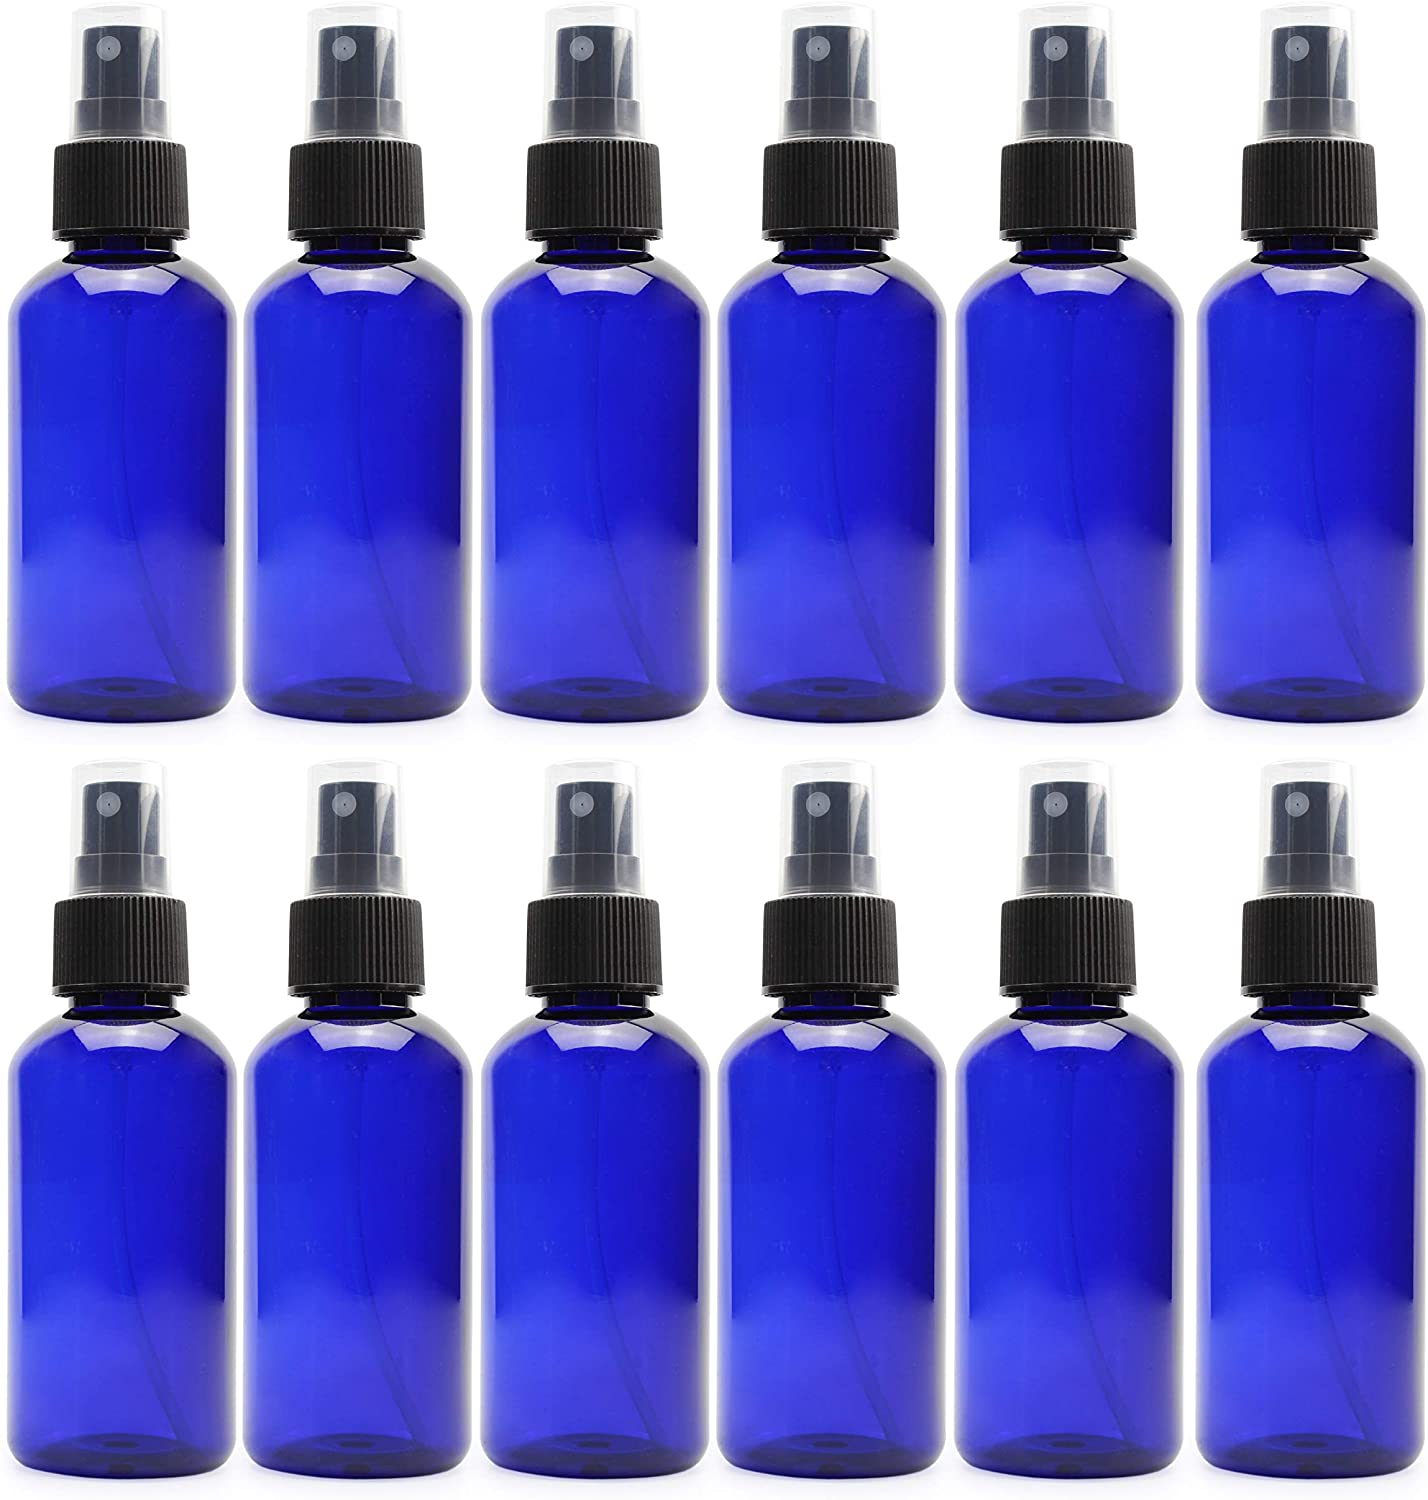 4oz Blue PLASTIC Fine Mist Spray Bottles (120-Pack w/ Black Sprayers) - SH_1418_BUNDLE